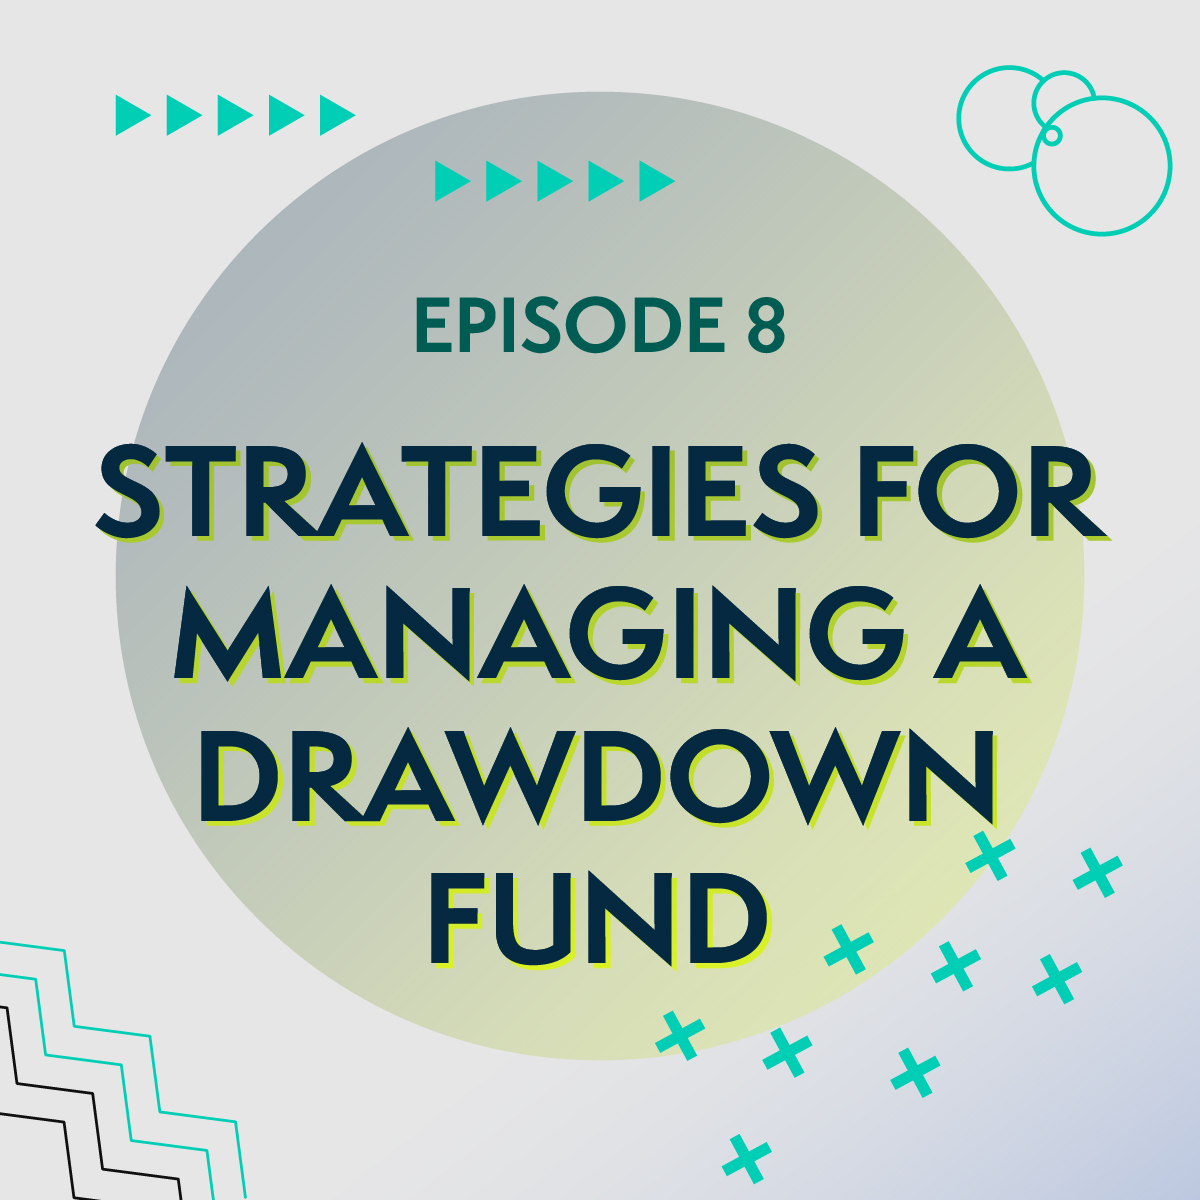 valueact drawdown fund